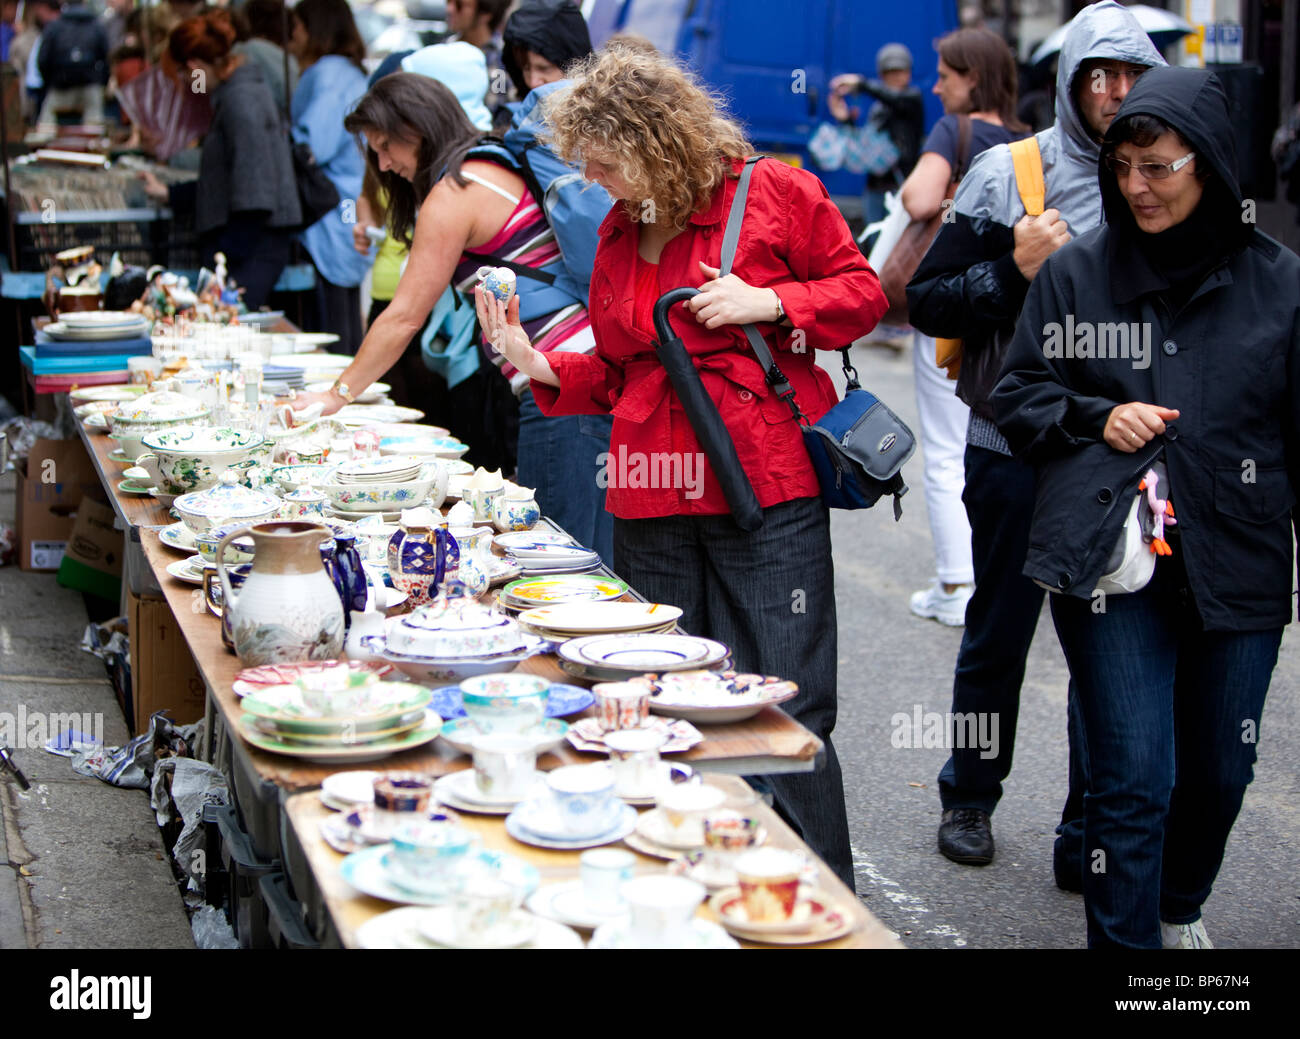 People at Notting Hill Market checking old crockery, London, England, UK. Stock Photo